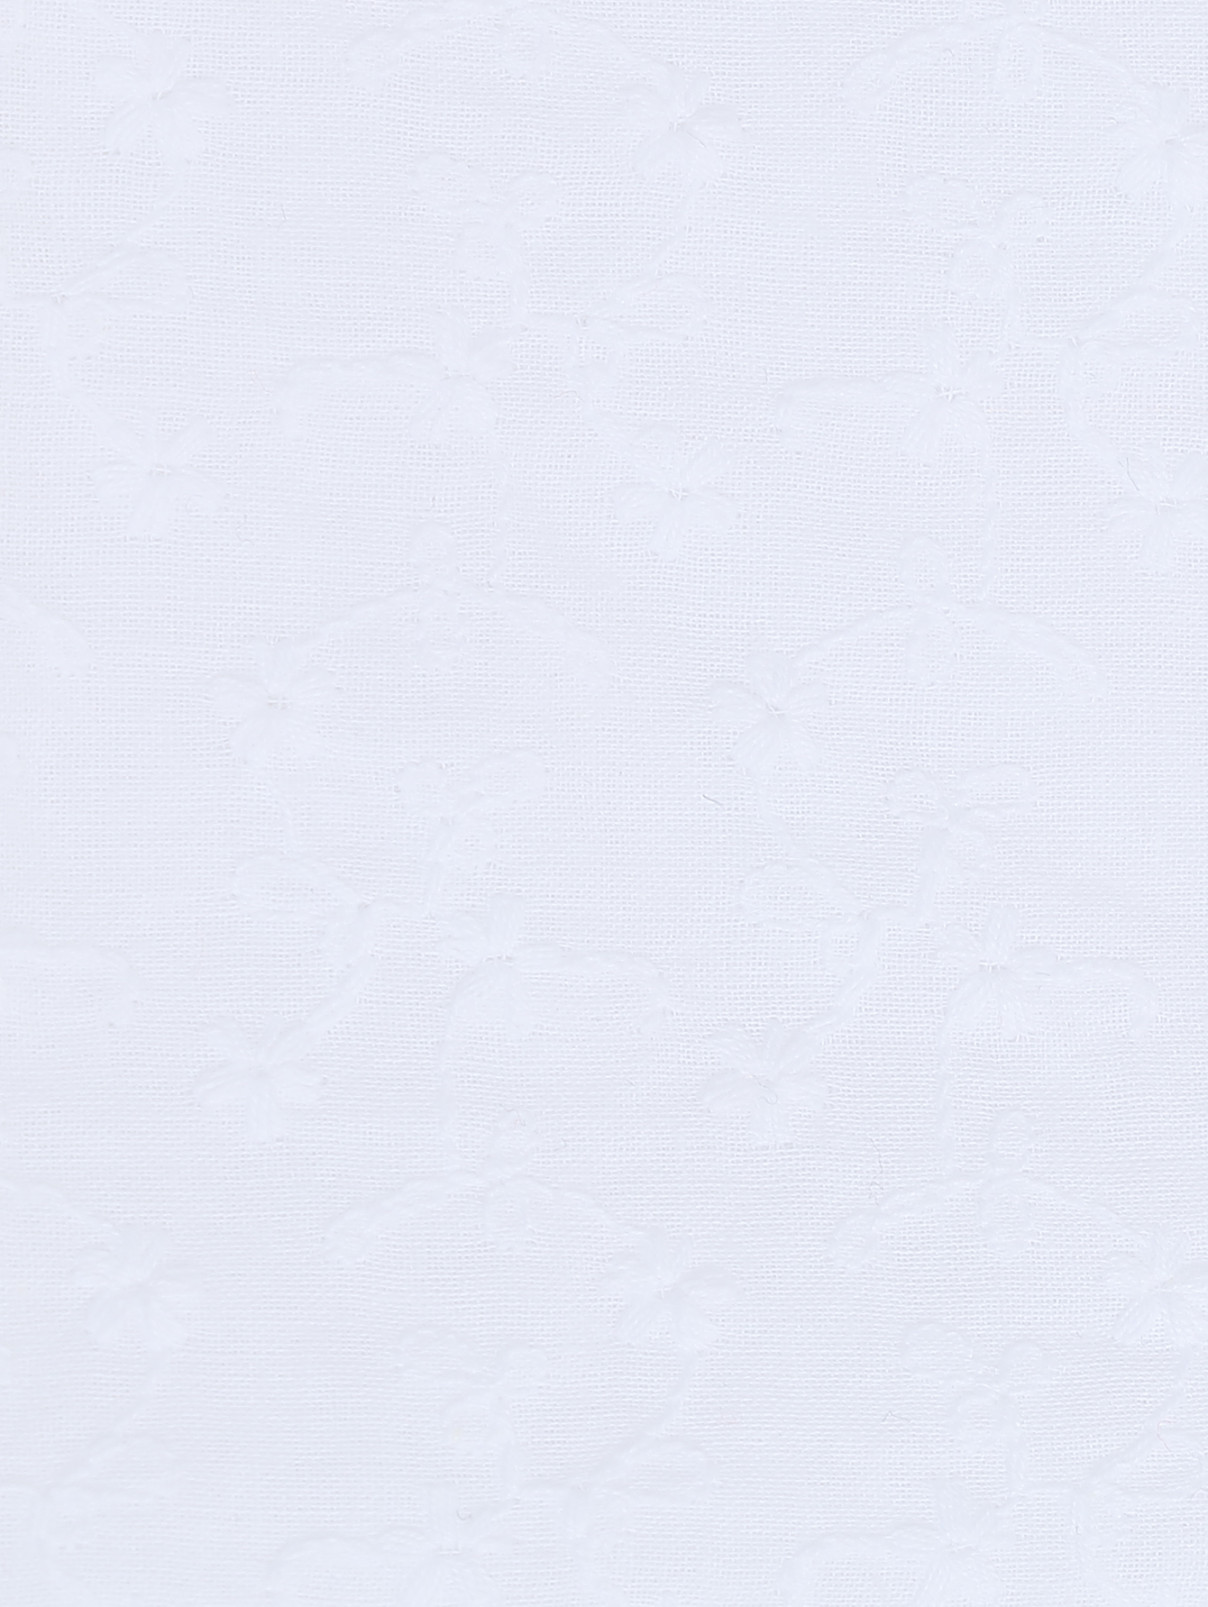 Бандана из хлопка с рисунком Maximo  –  Деталь1  – Цвет:  Белый